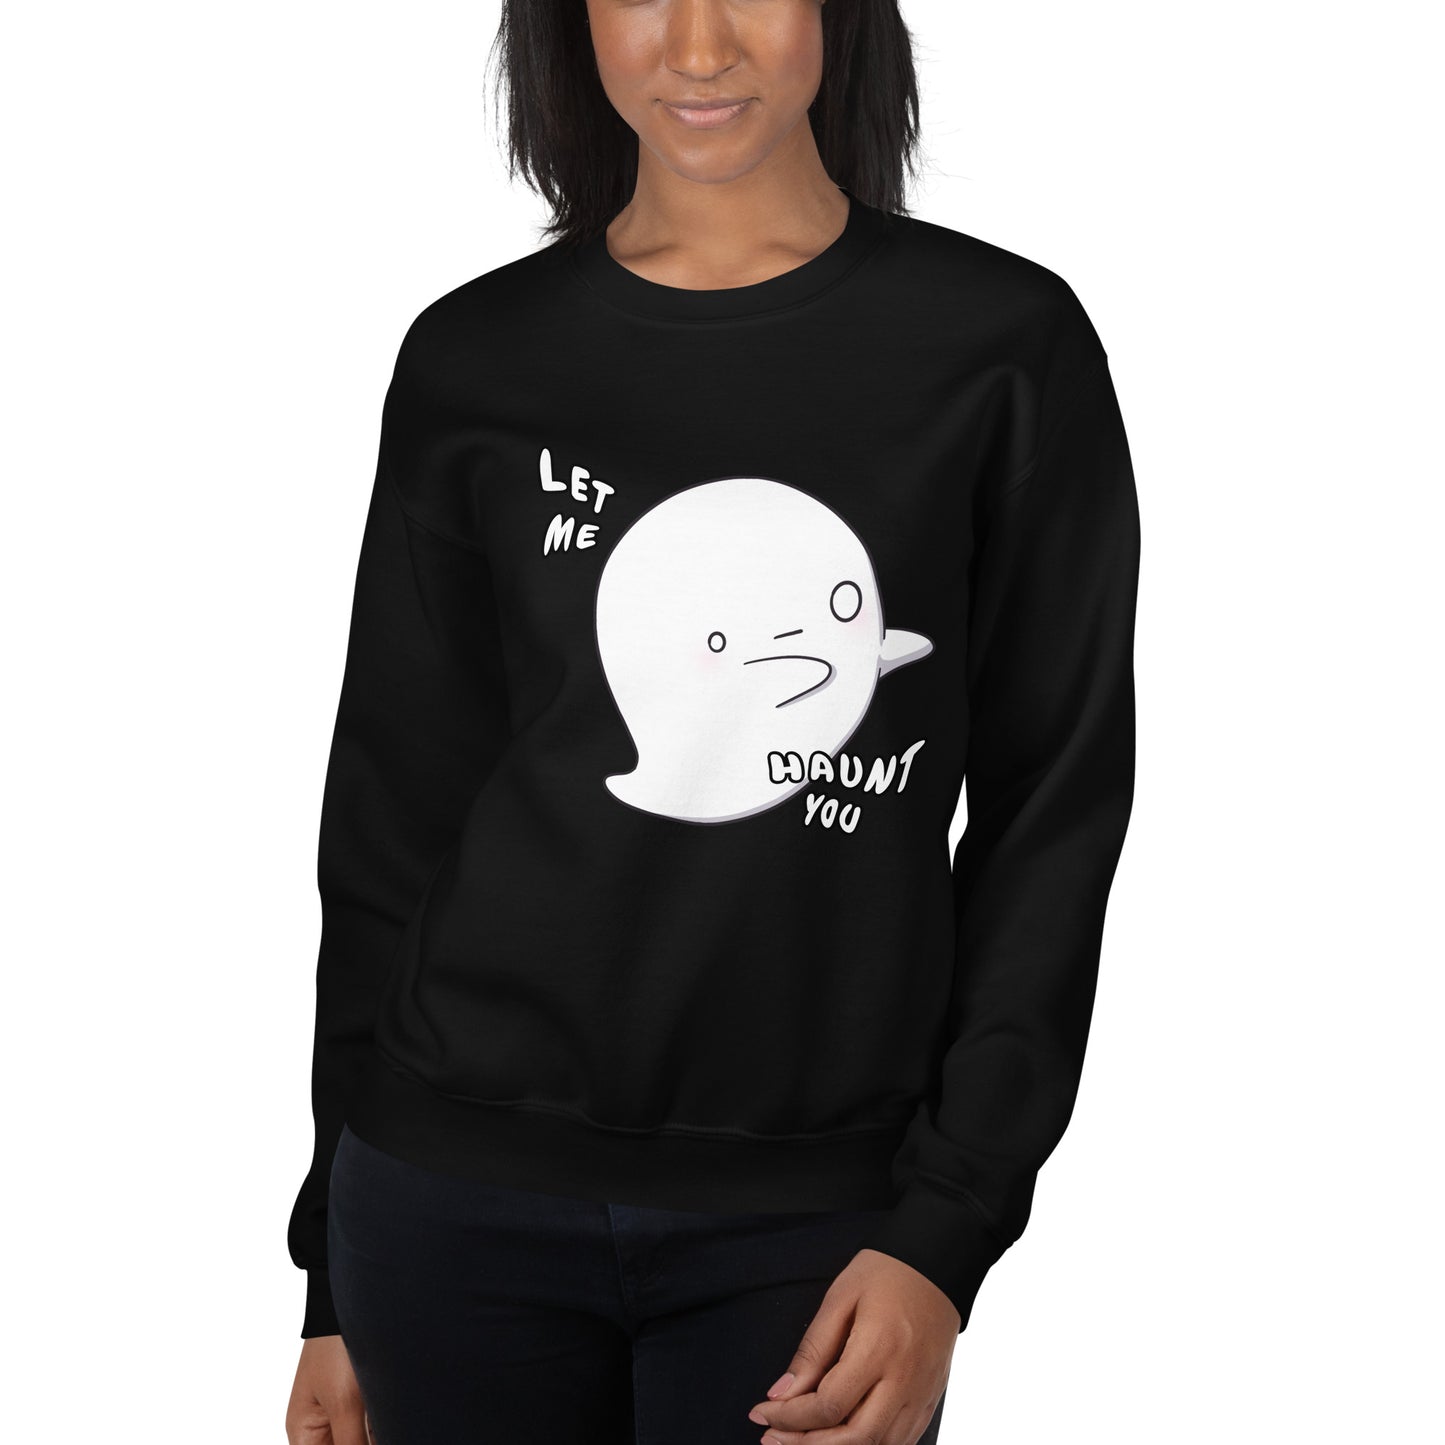 Let me haunt you - Unisex Sweatshirt